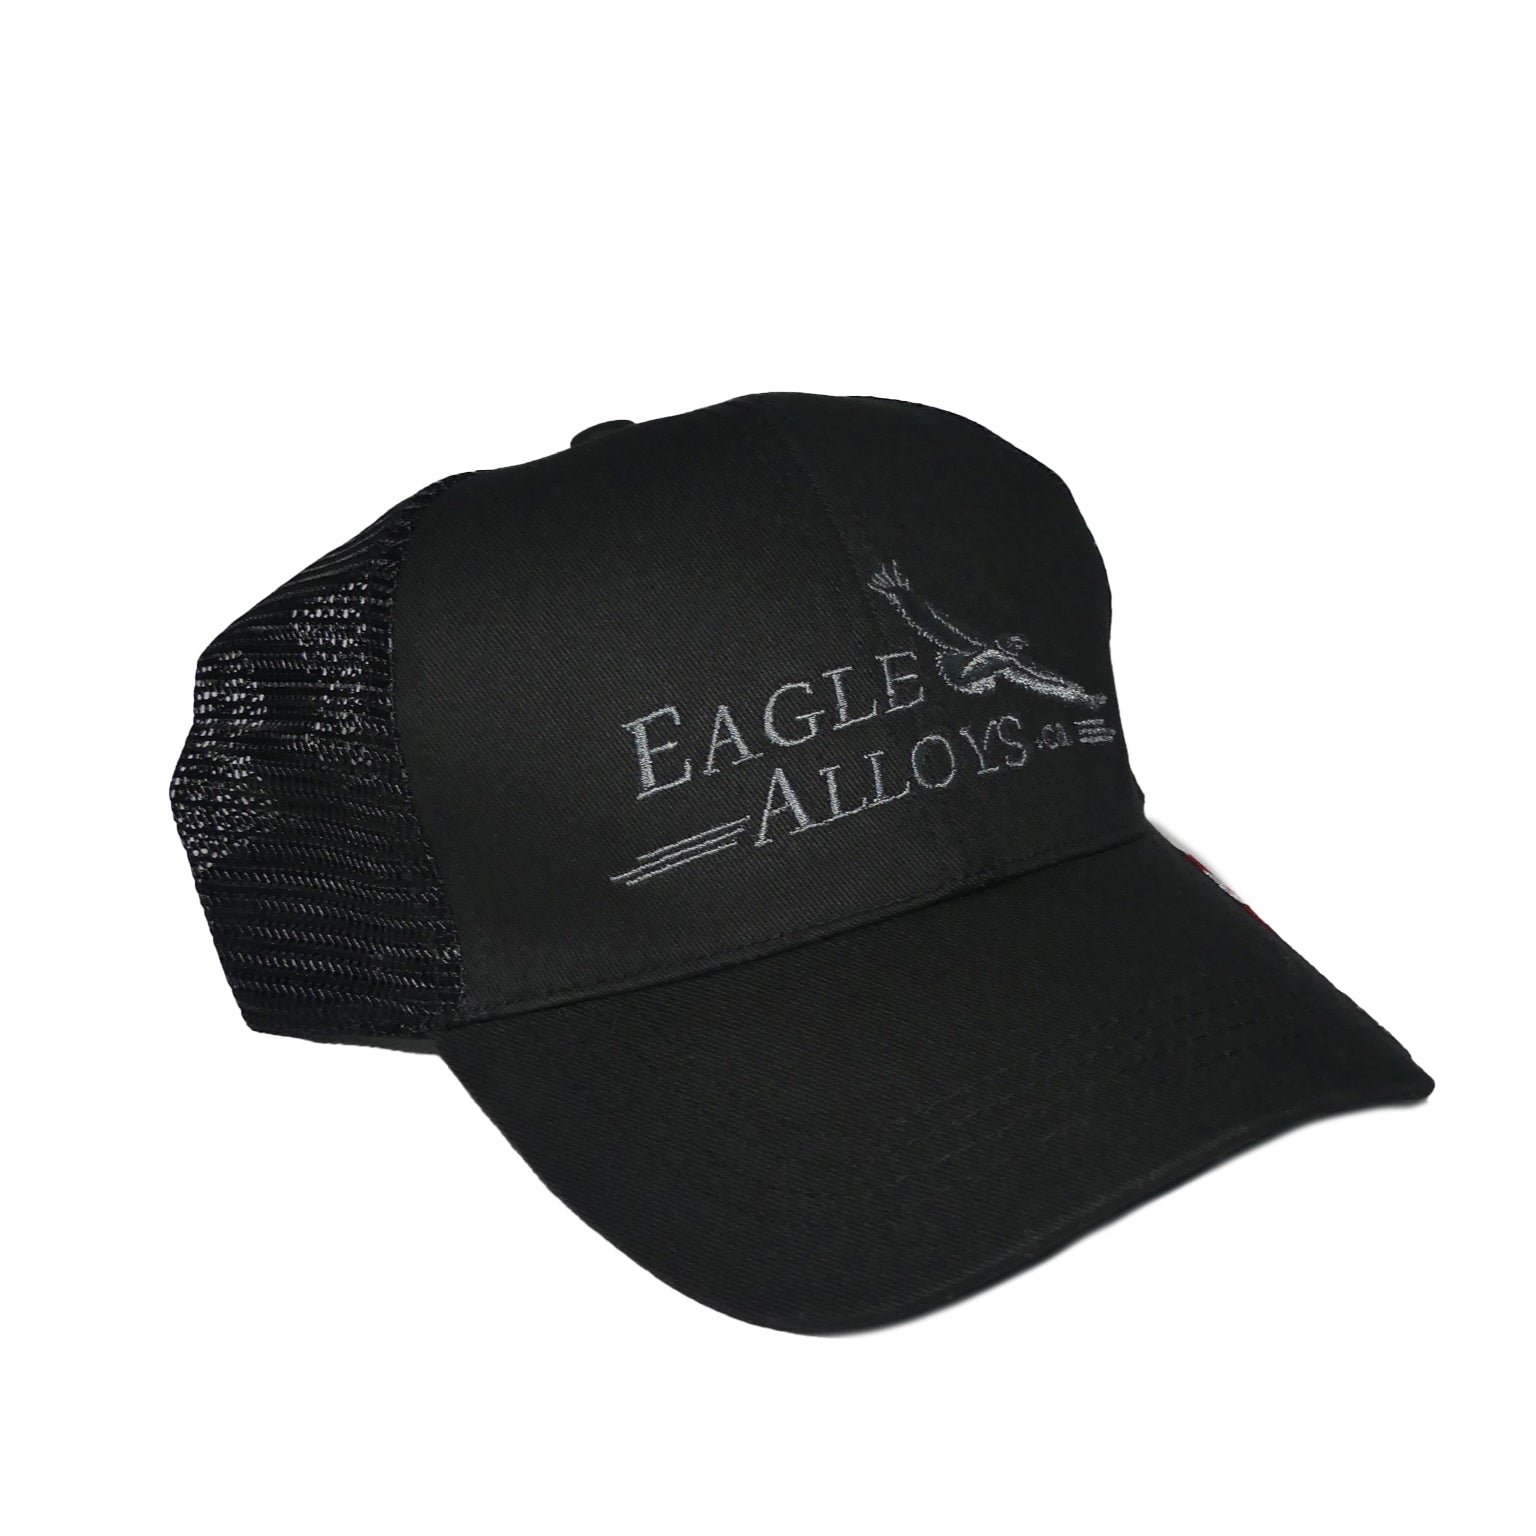 Eagle Trucker Hat Black O/S